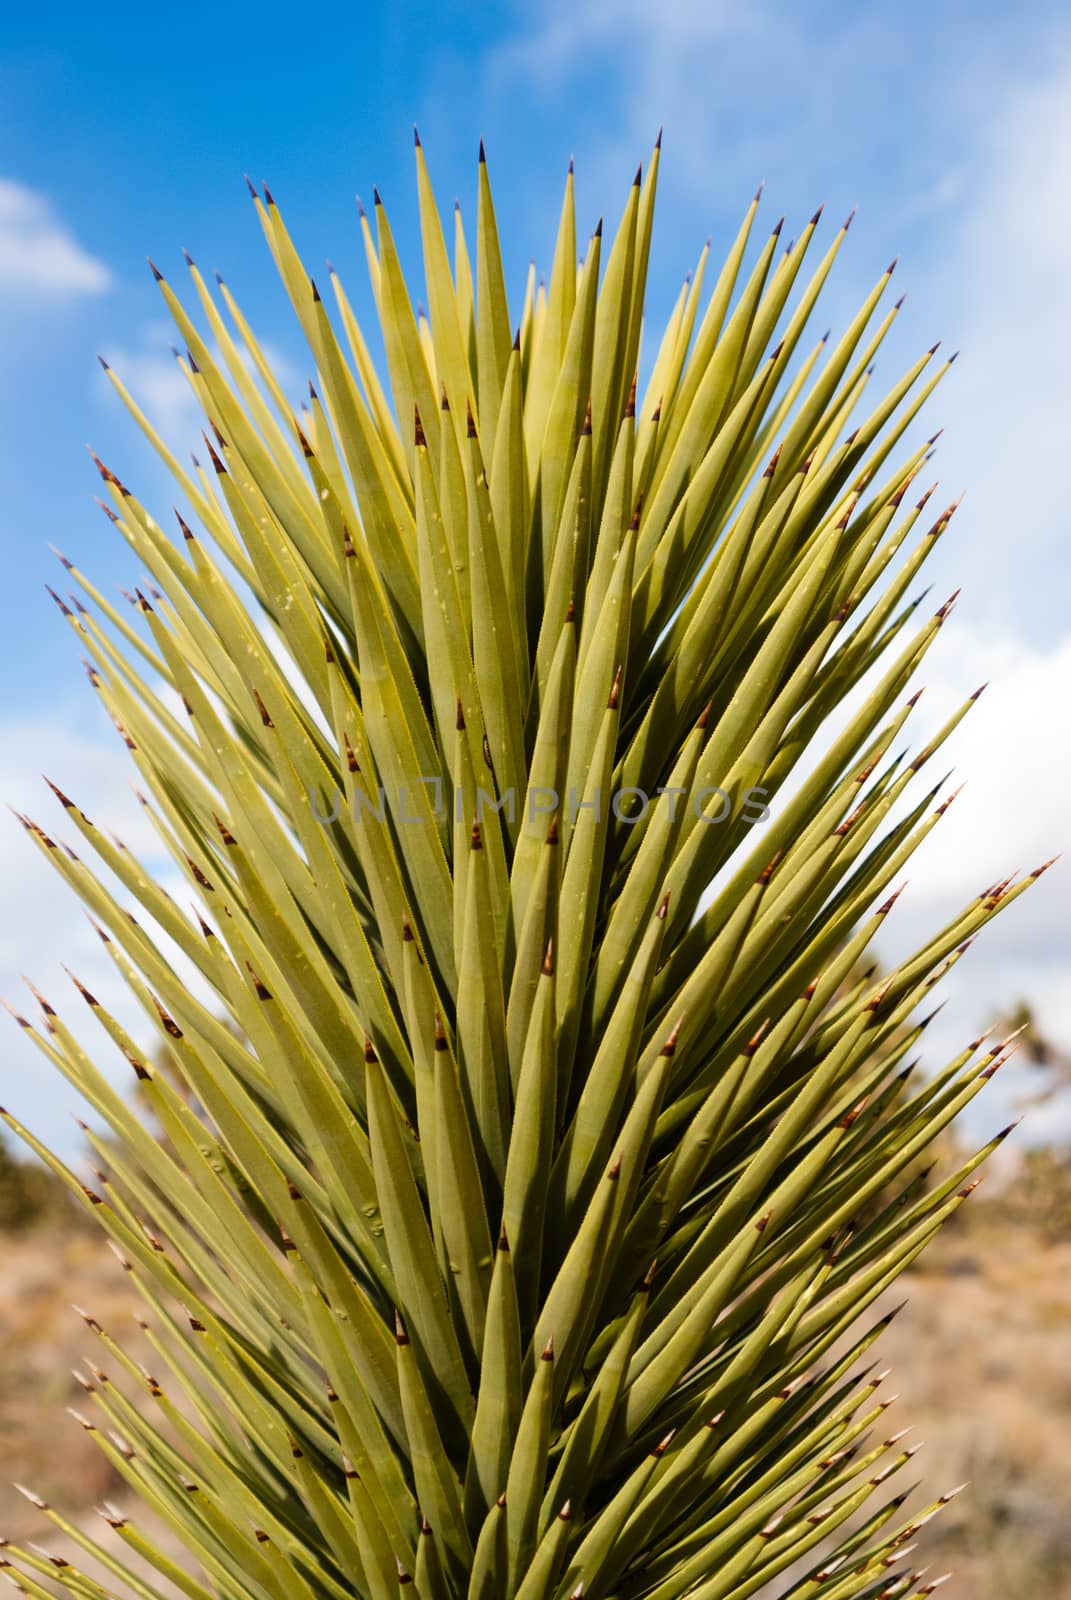 Yucca Plant by emattil